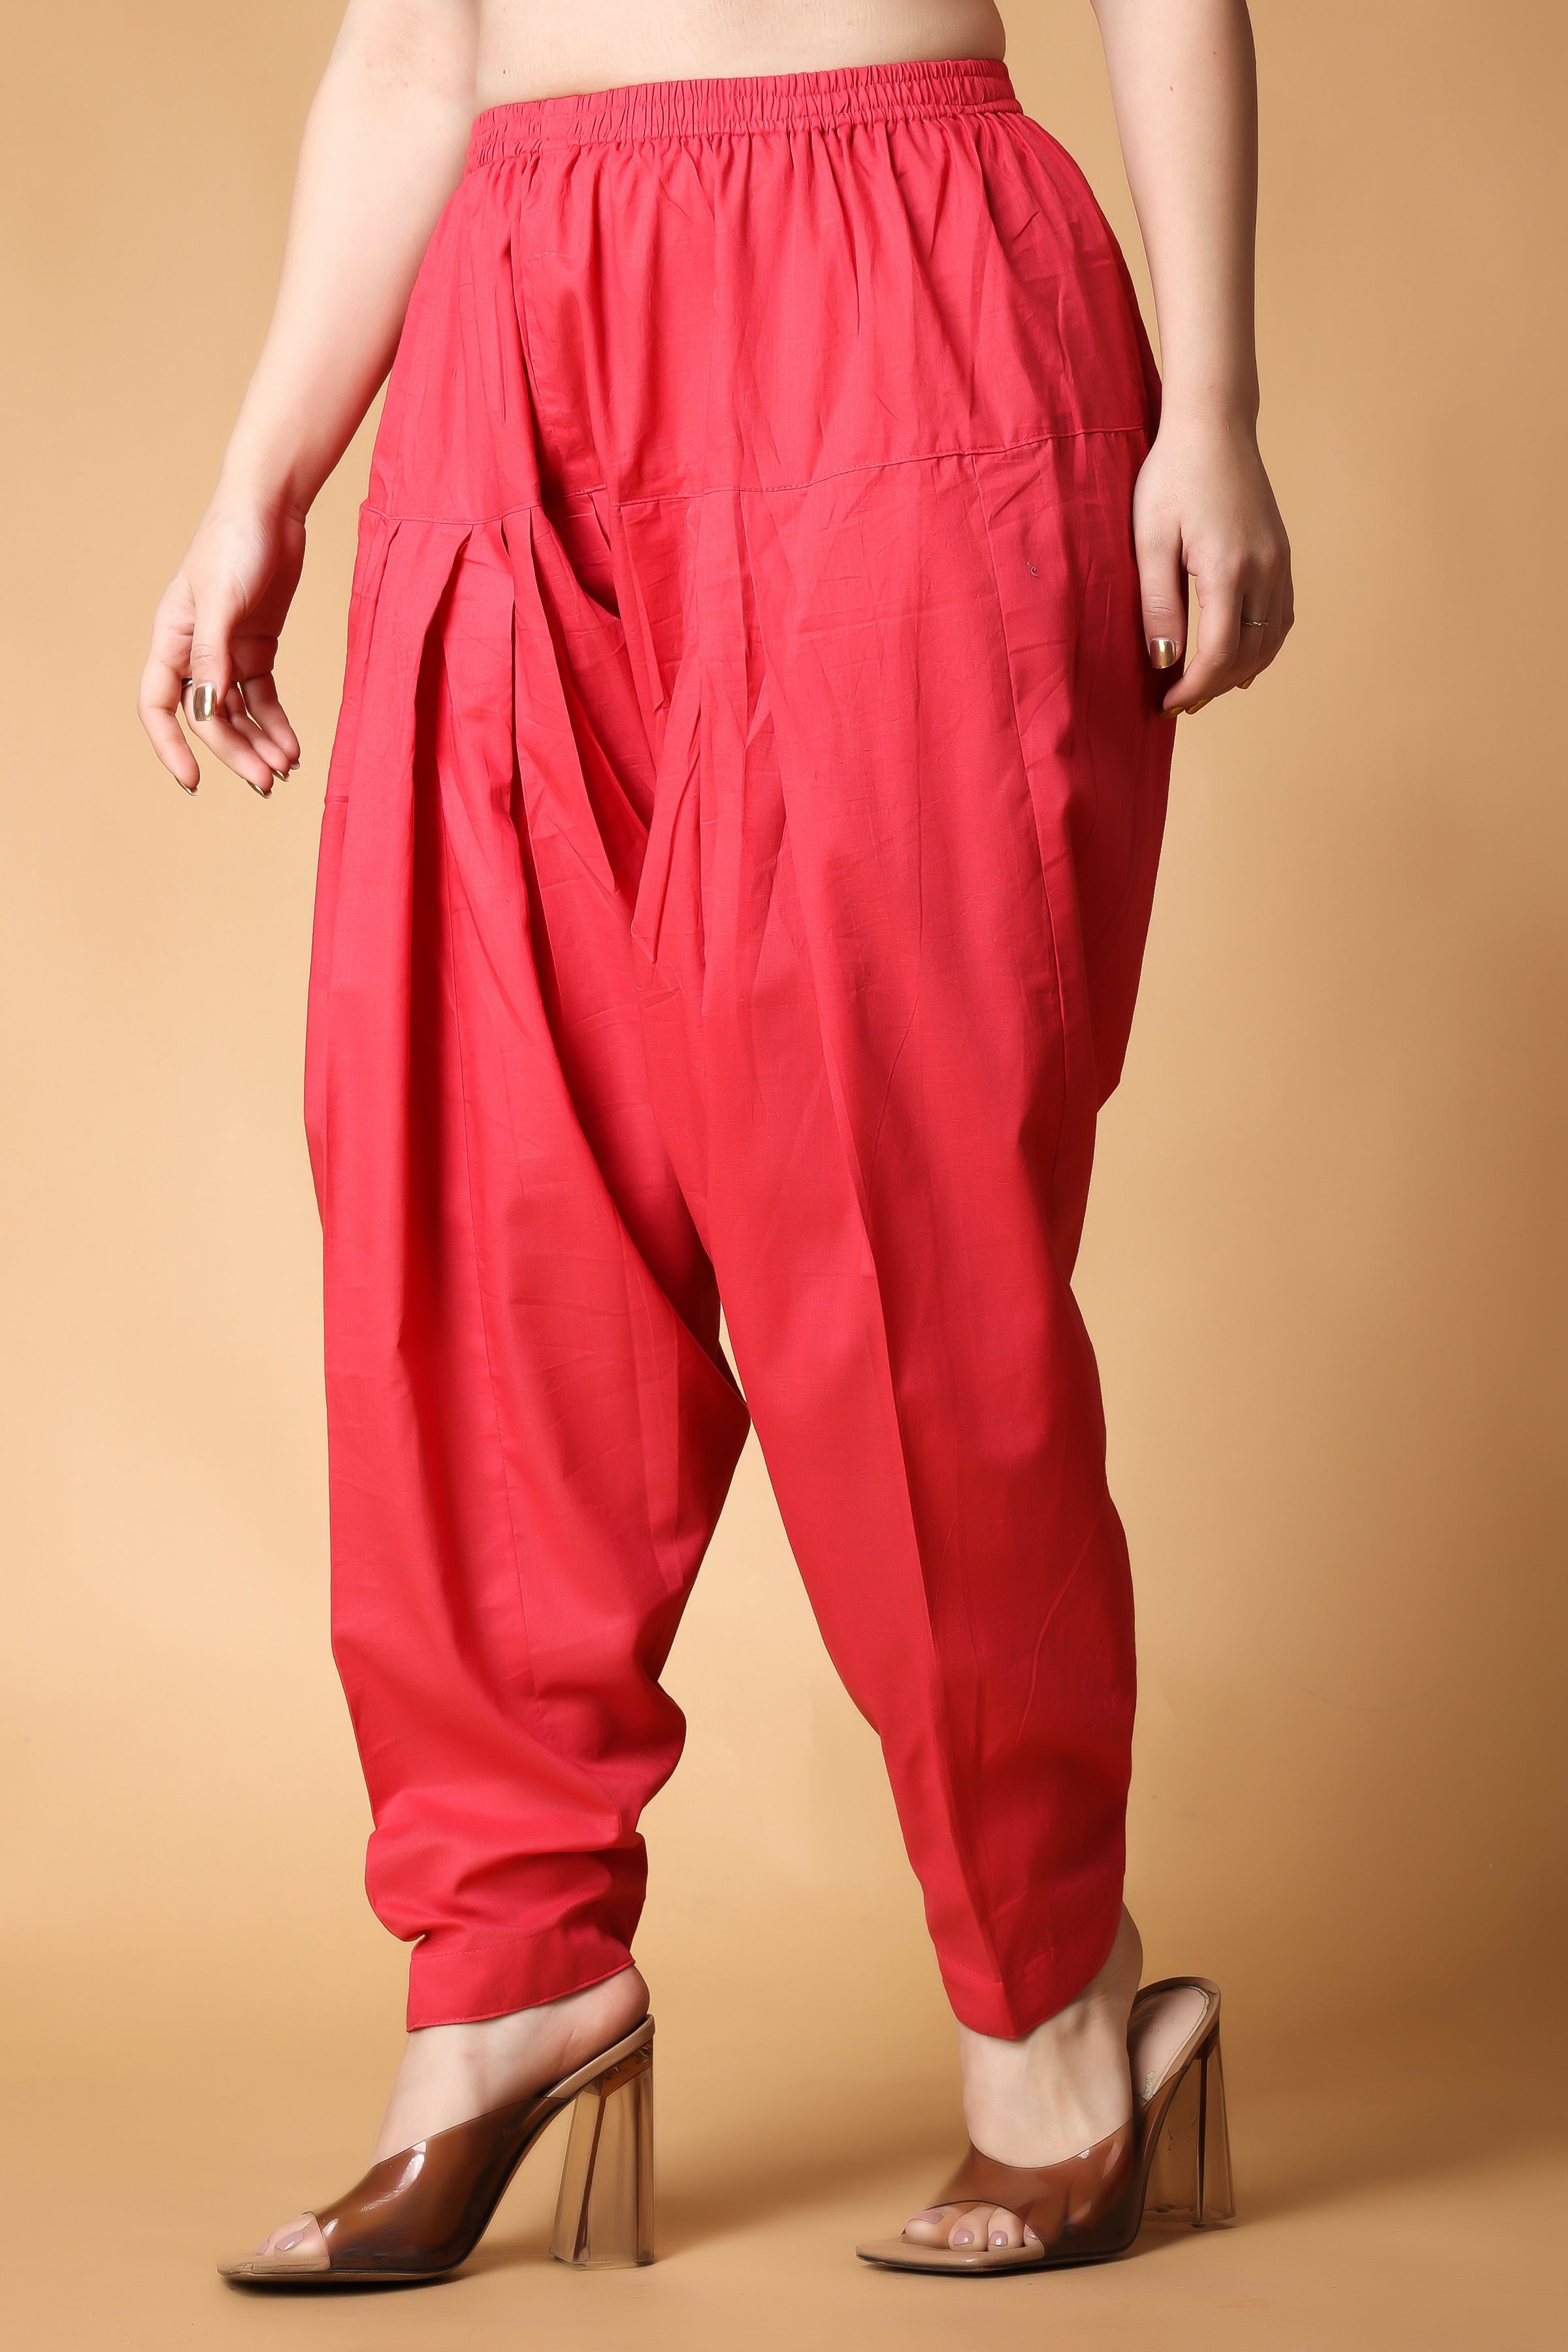 Tutorial: How to make salwar pants – Sewing